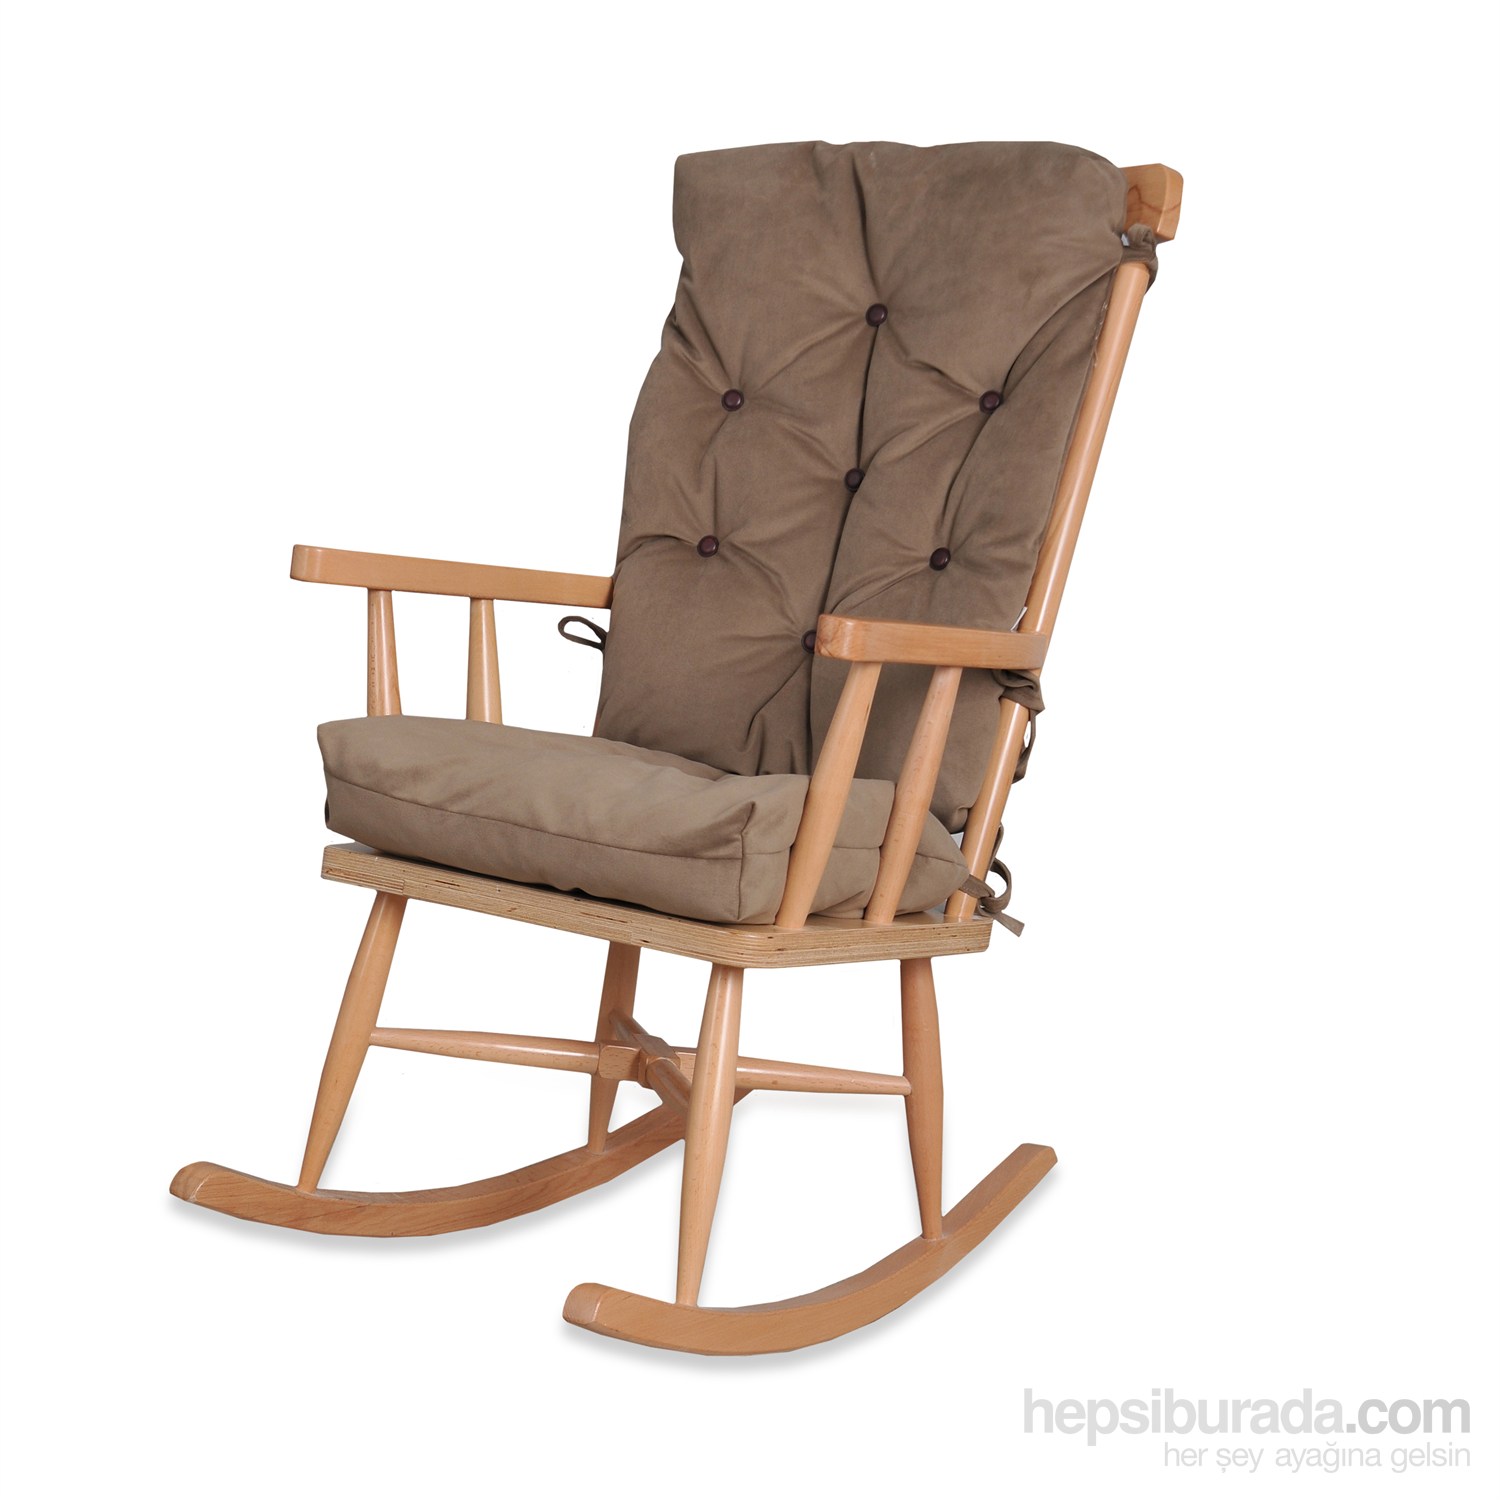 Asedia Teksas Sallanan Sandalye Naturel Renk Fiyatı